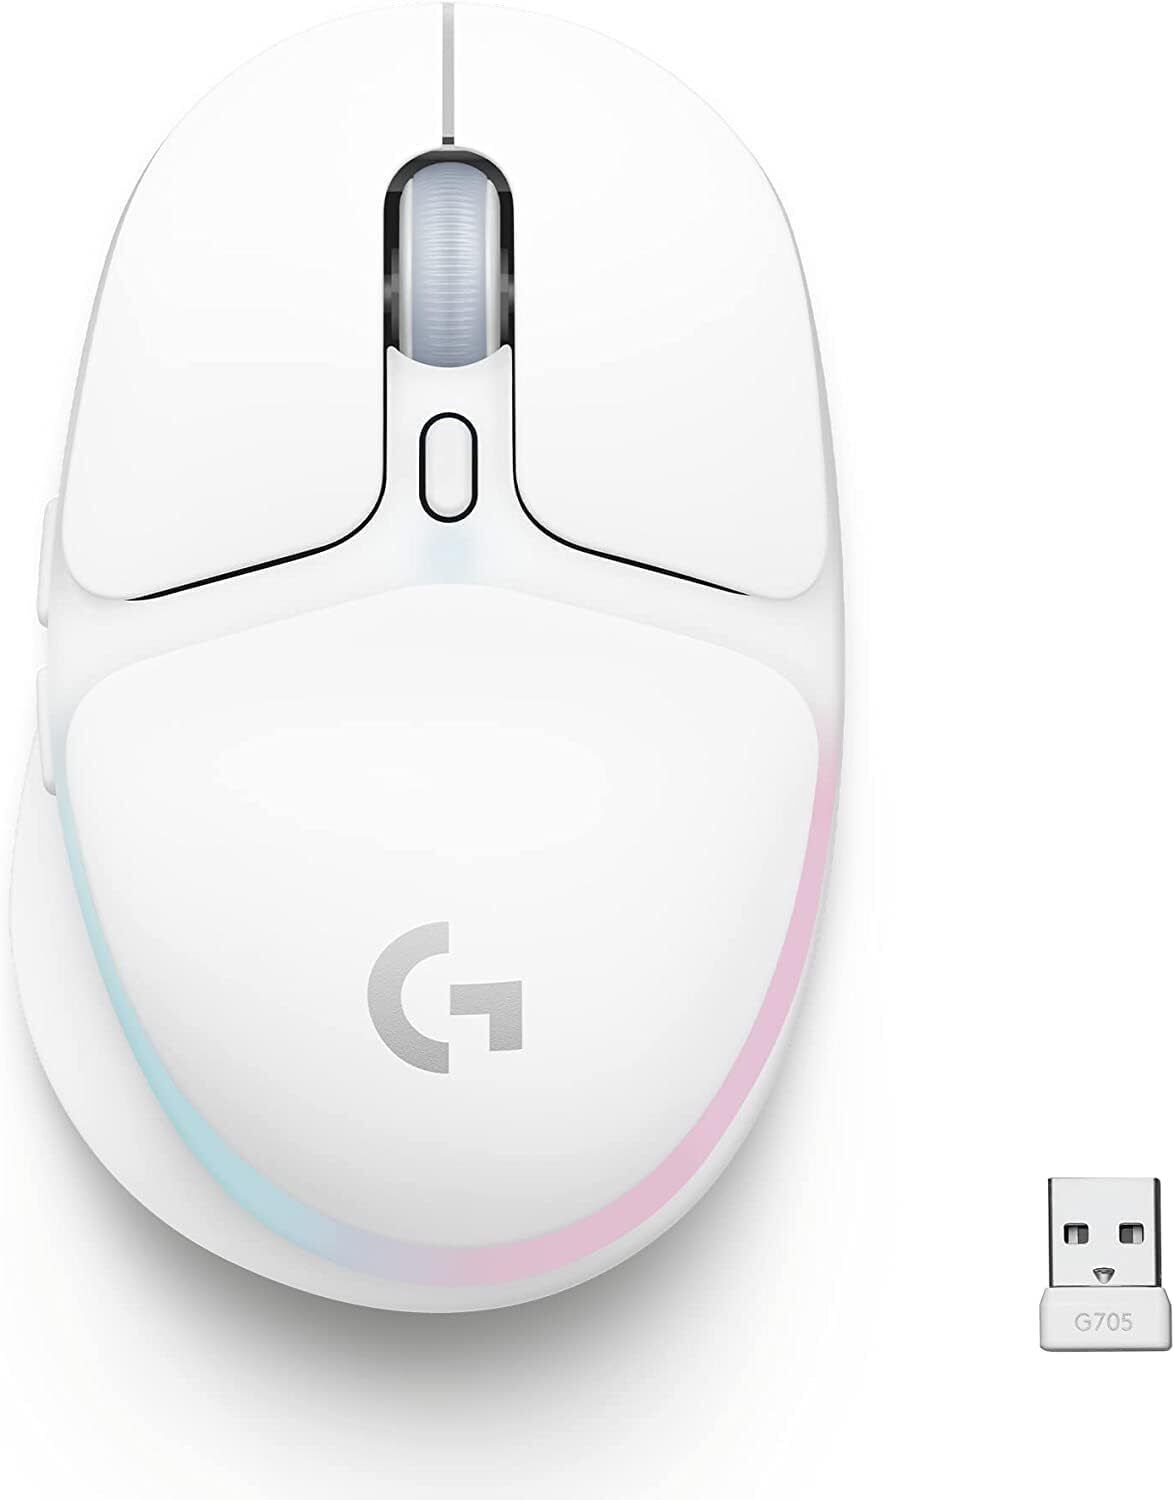 Logitech G705 Wireless Gaming Mouse, LIGHTSYNC RGB Lighting - White Mist